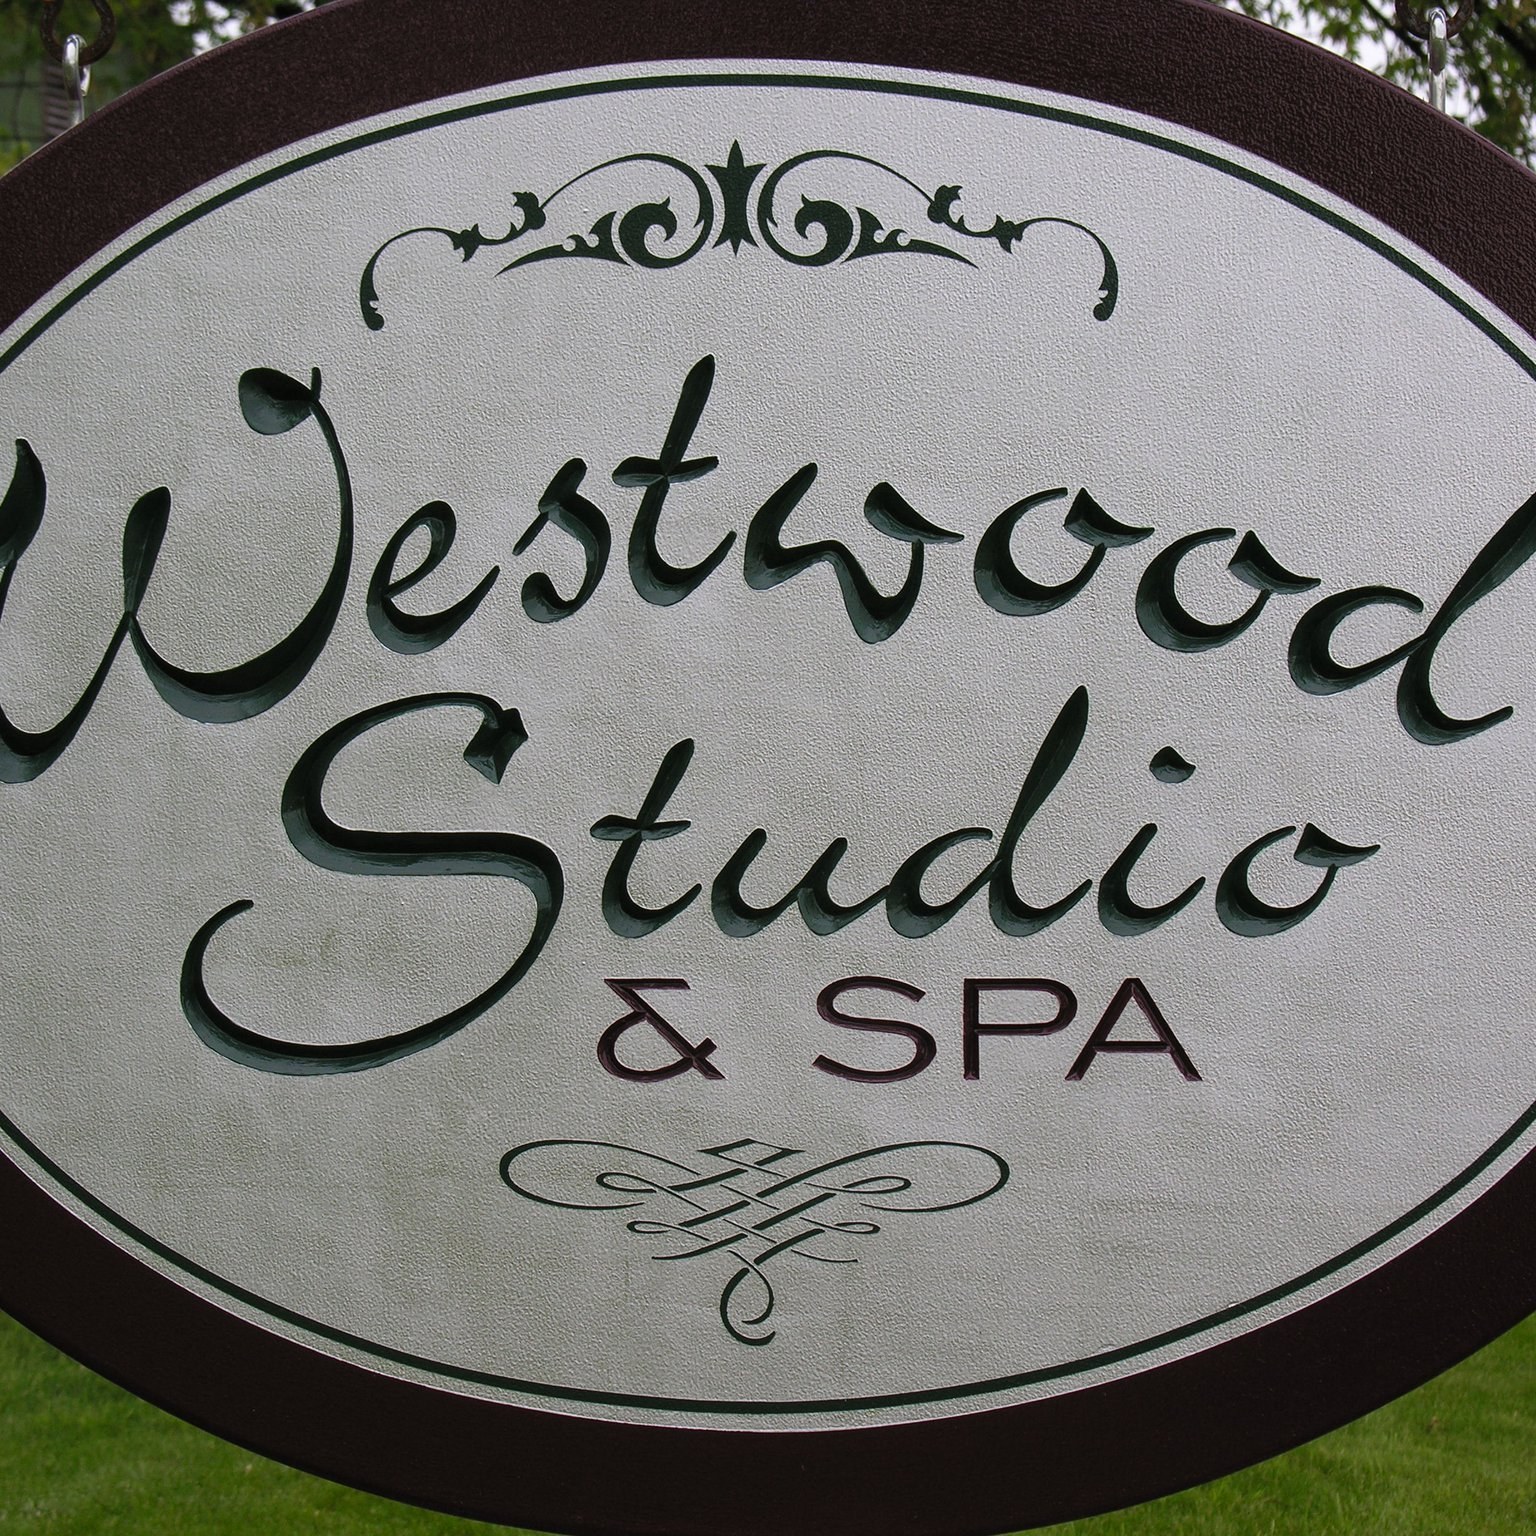 Westwood Studio & Spa